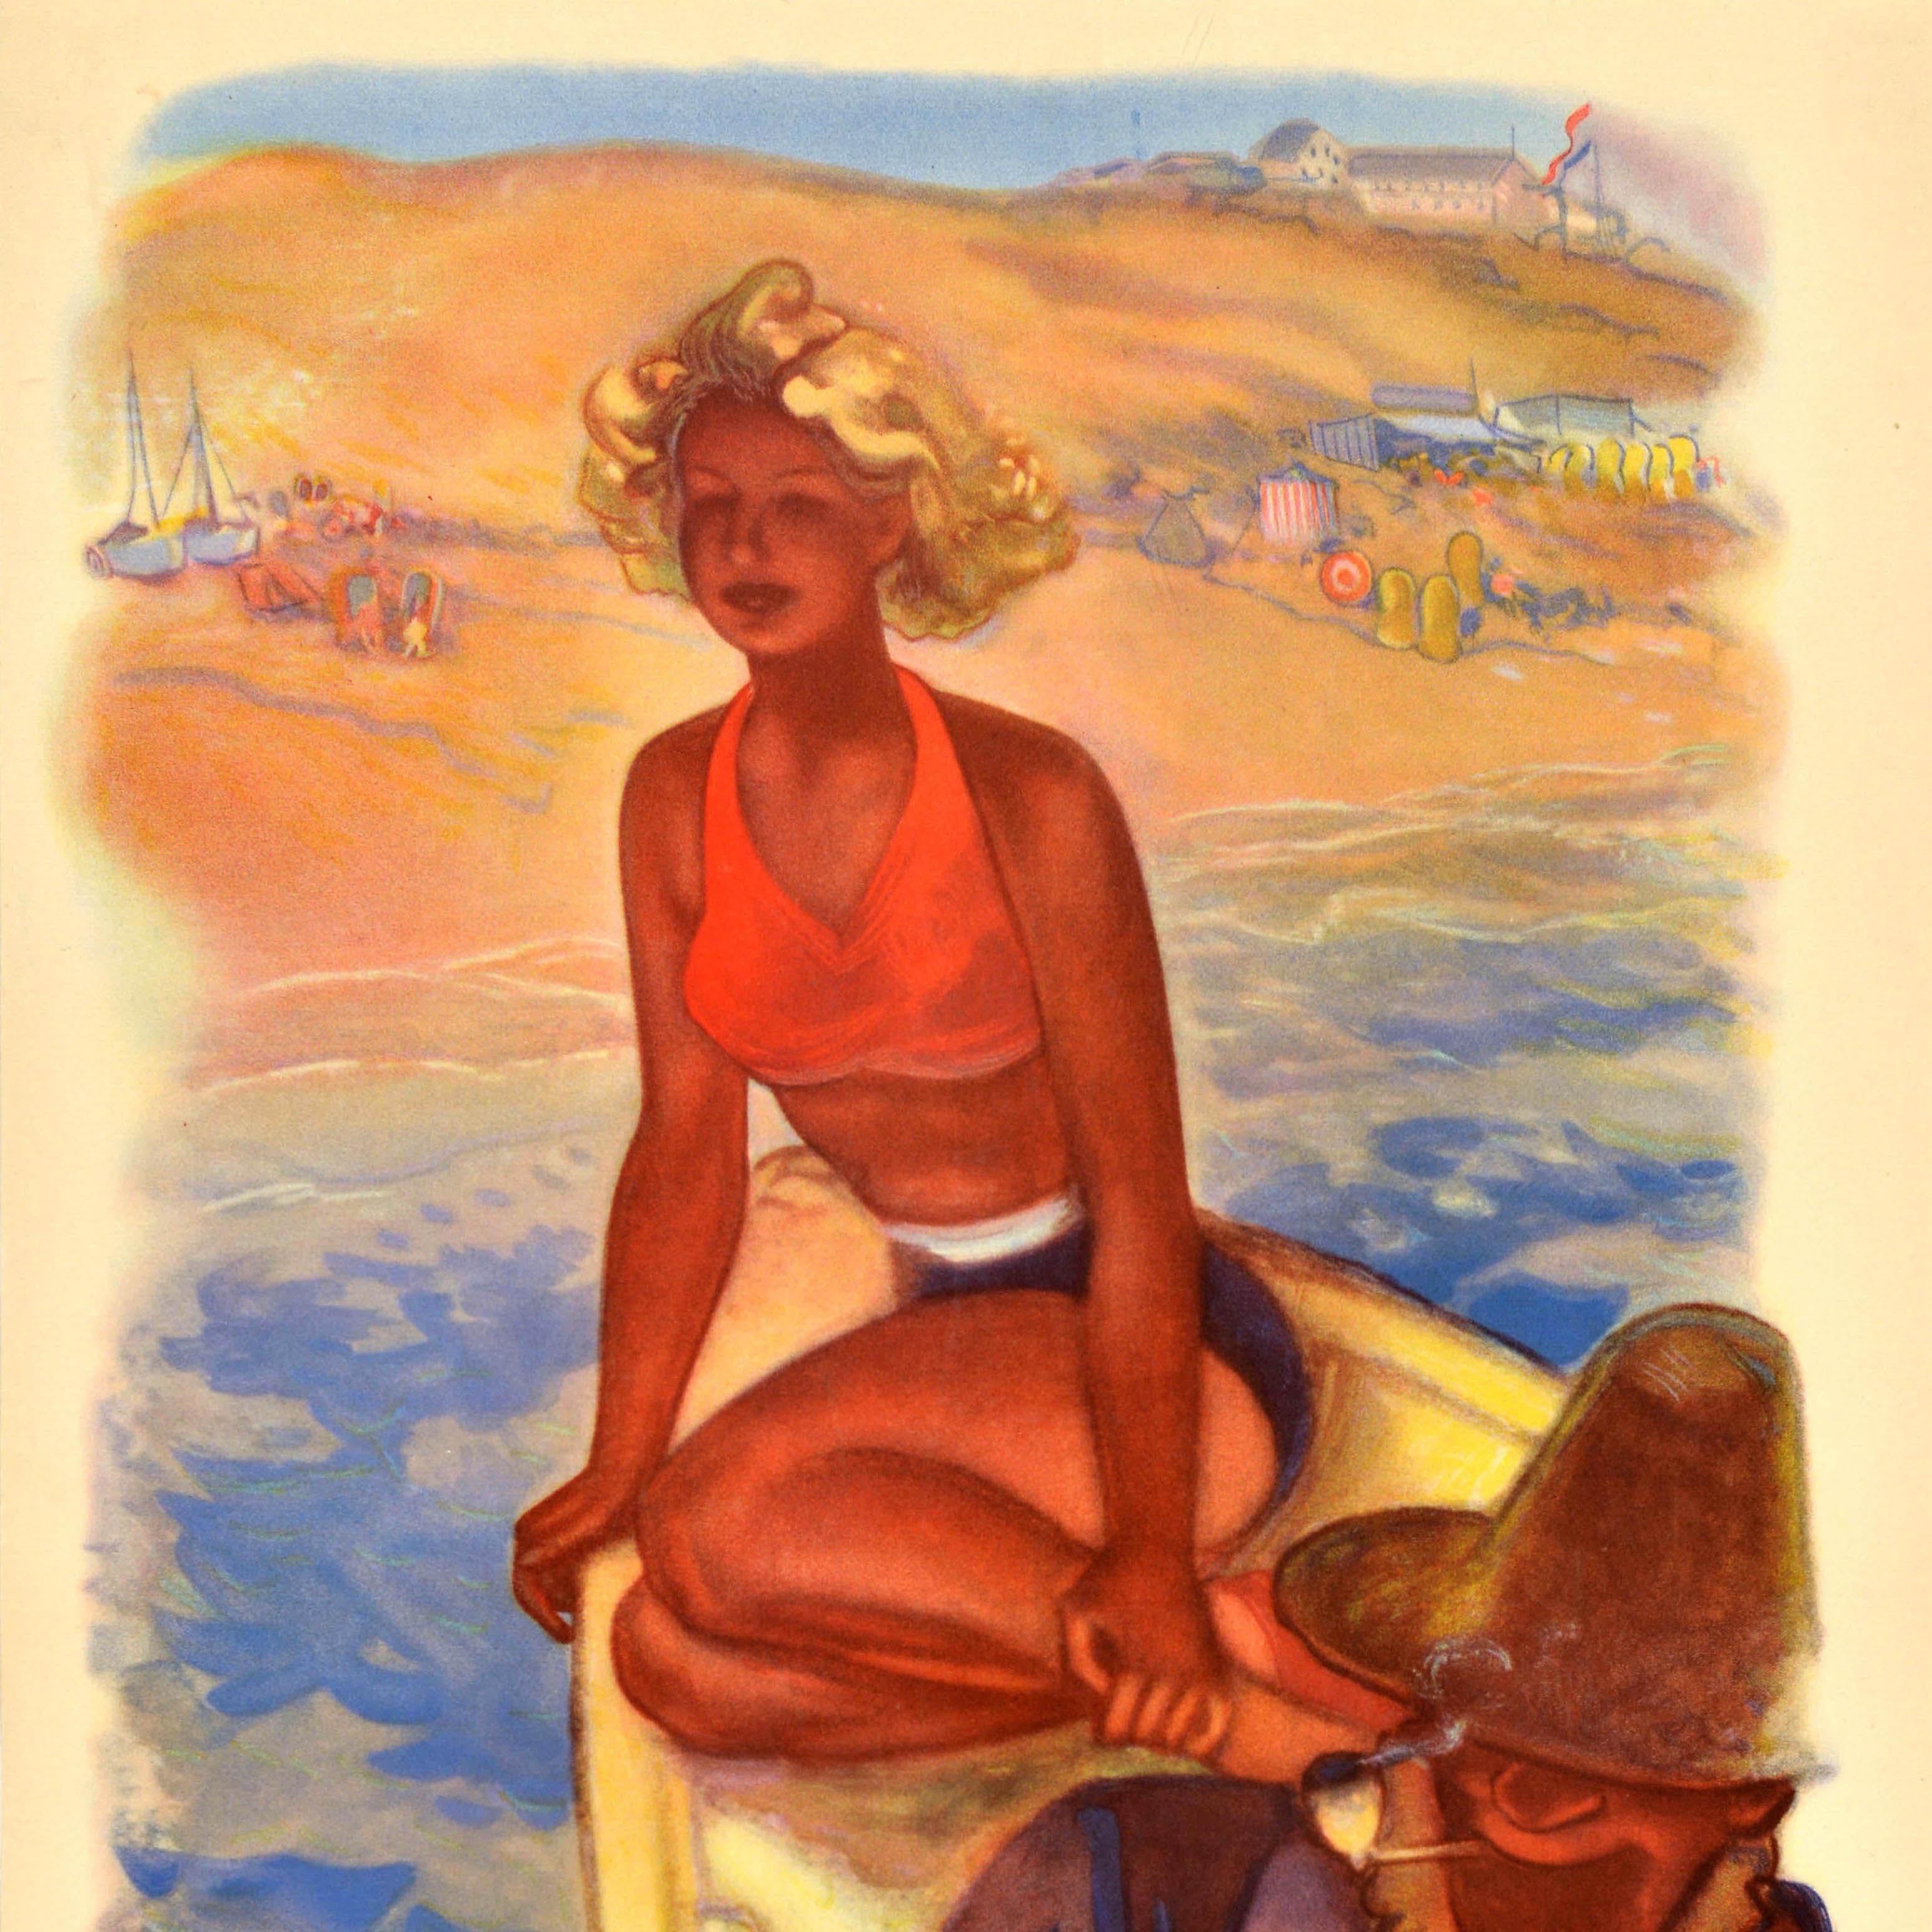 Original Vintage Travel Poster Holland Beach Fisherman Netherlands Midcentury - Beige Print by Unknown